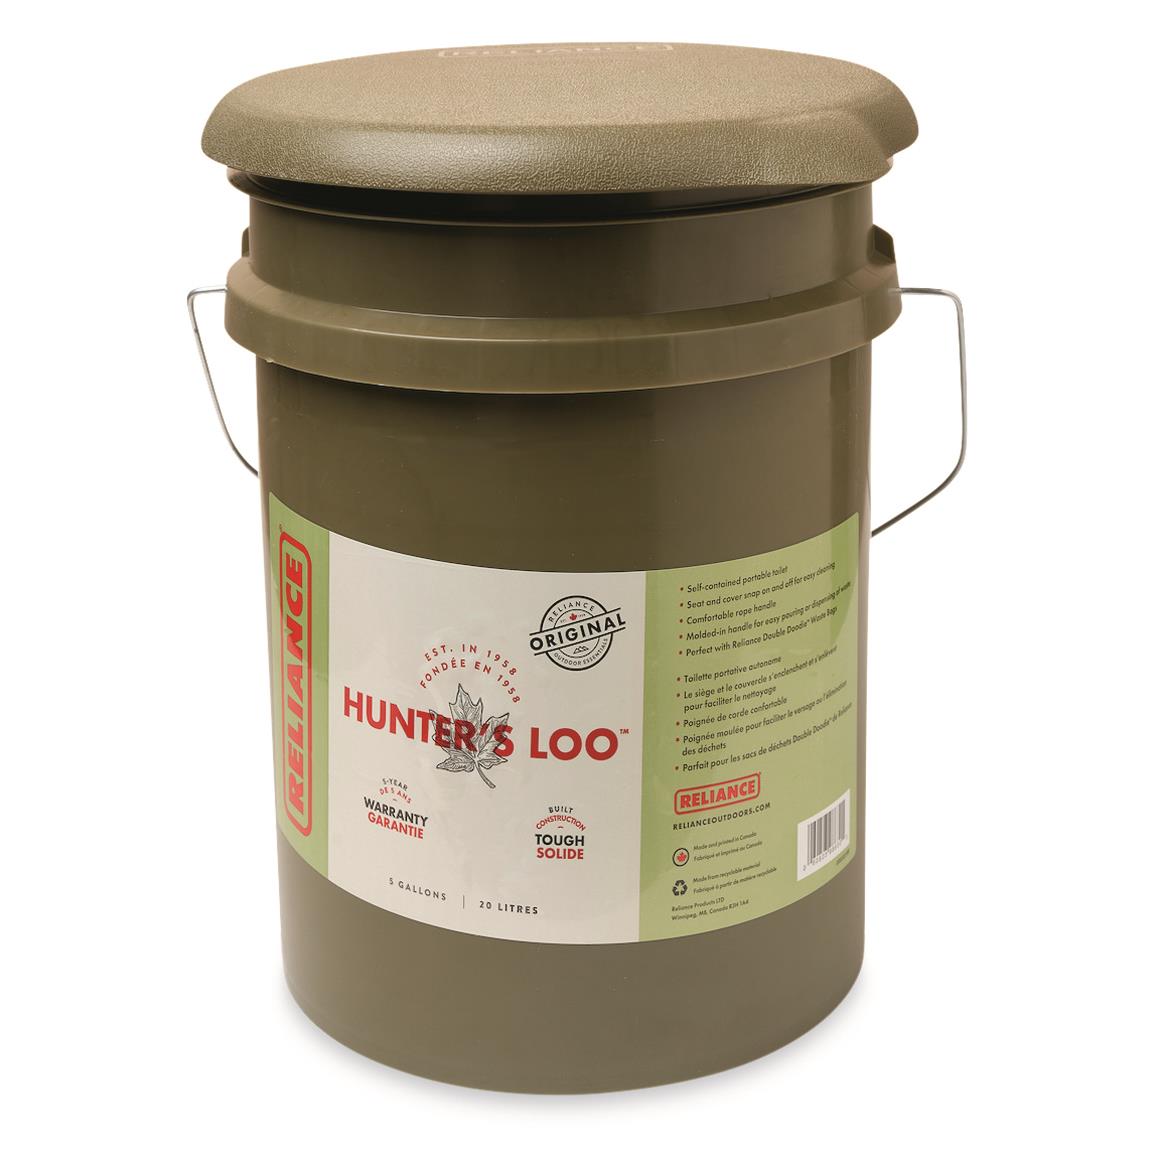 Reliance Luggable Loo Hunter's Loo Portable Toilet, Green Camo